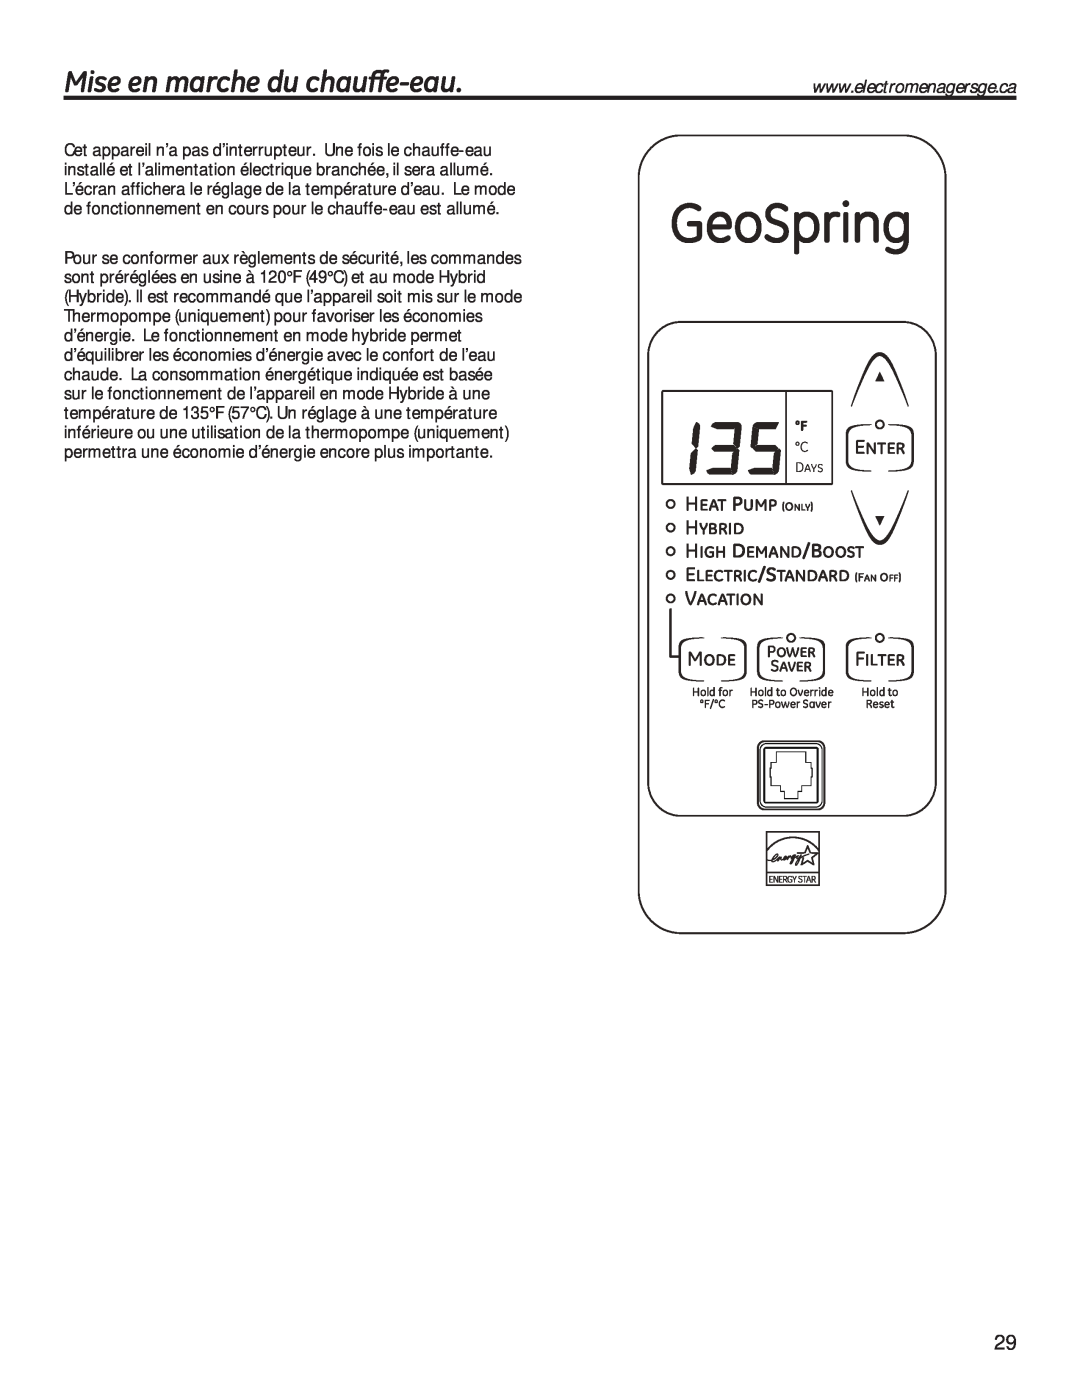 GE 49-50292 owner manual 0LVHHQPDUFKHGXFKDXȺHHDX, GeoSpring, C Enter, Vacation, Mode, Power, Filter, Saver 